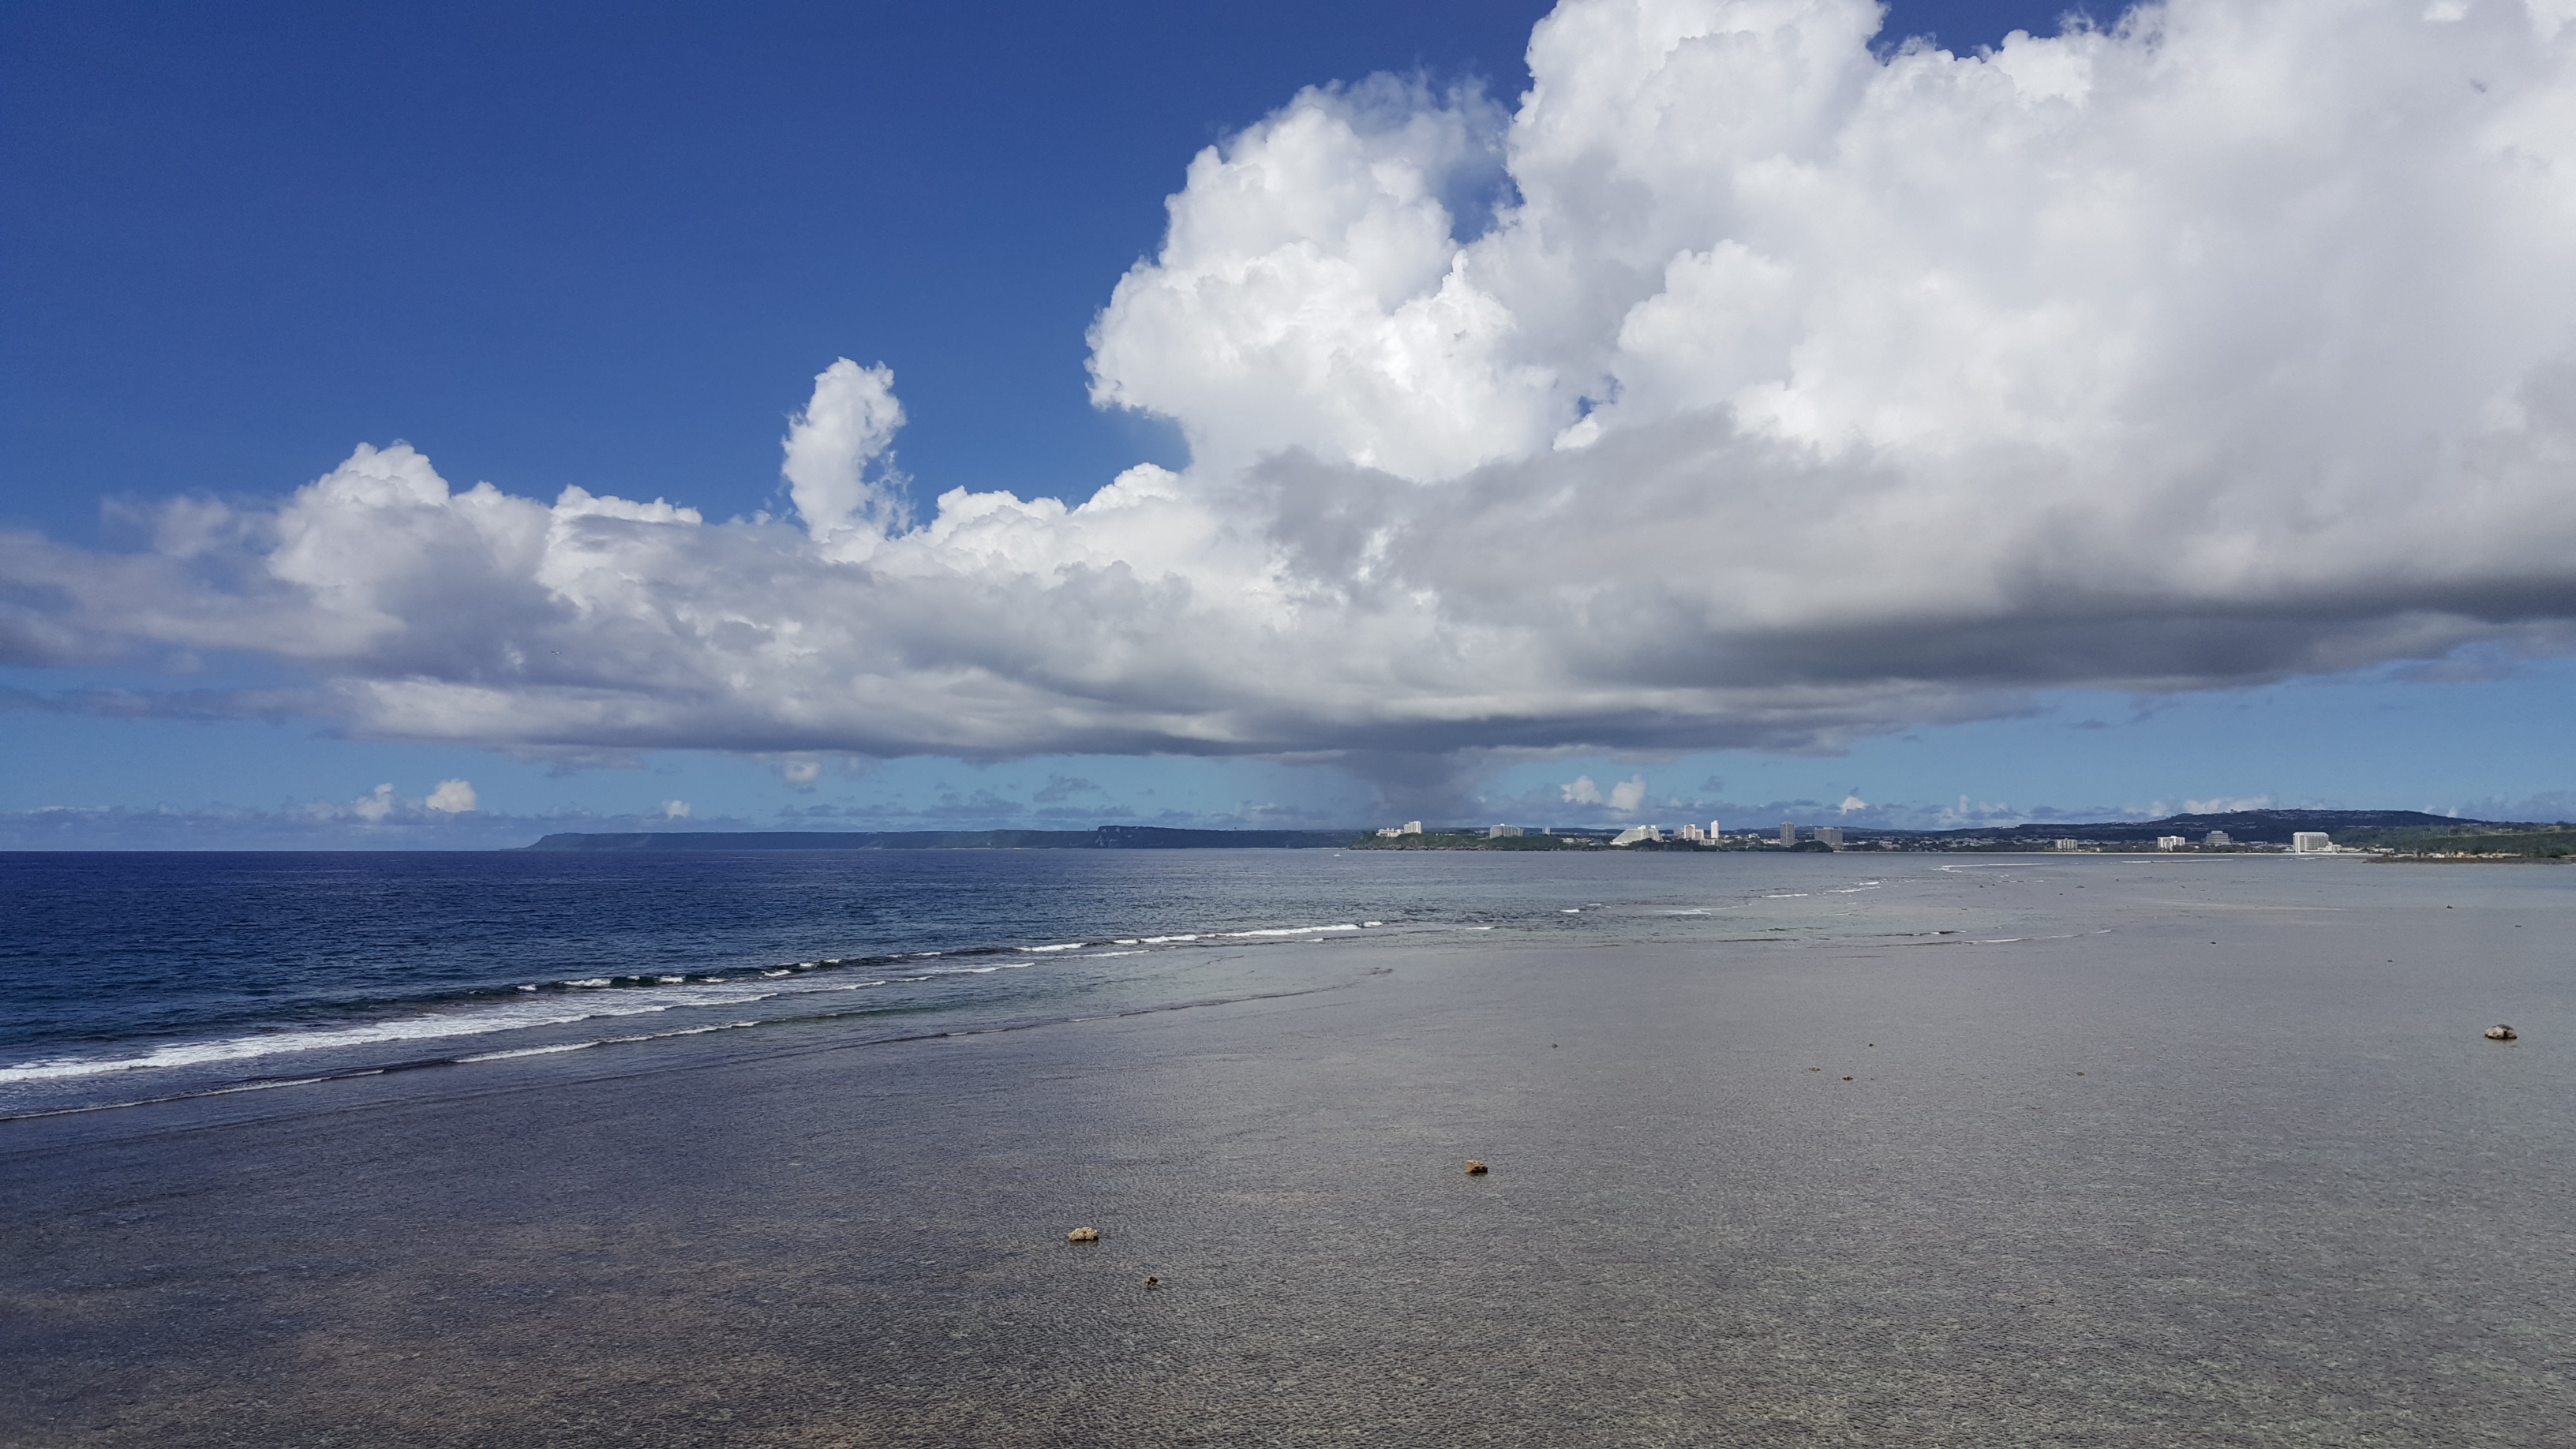 20180521_144348.jpg : 괌 풍경